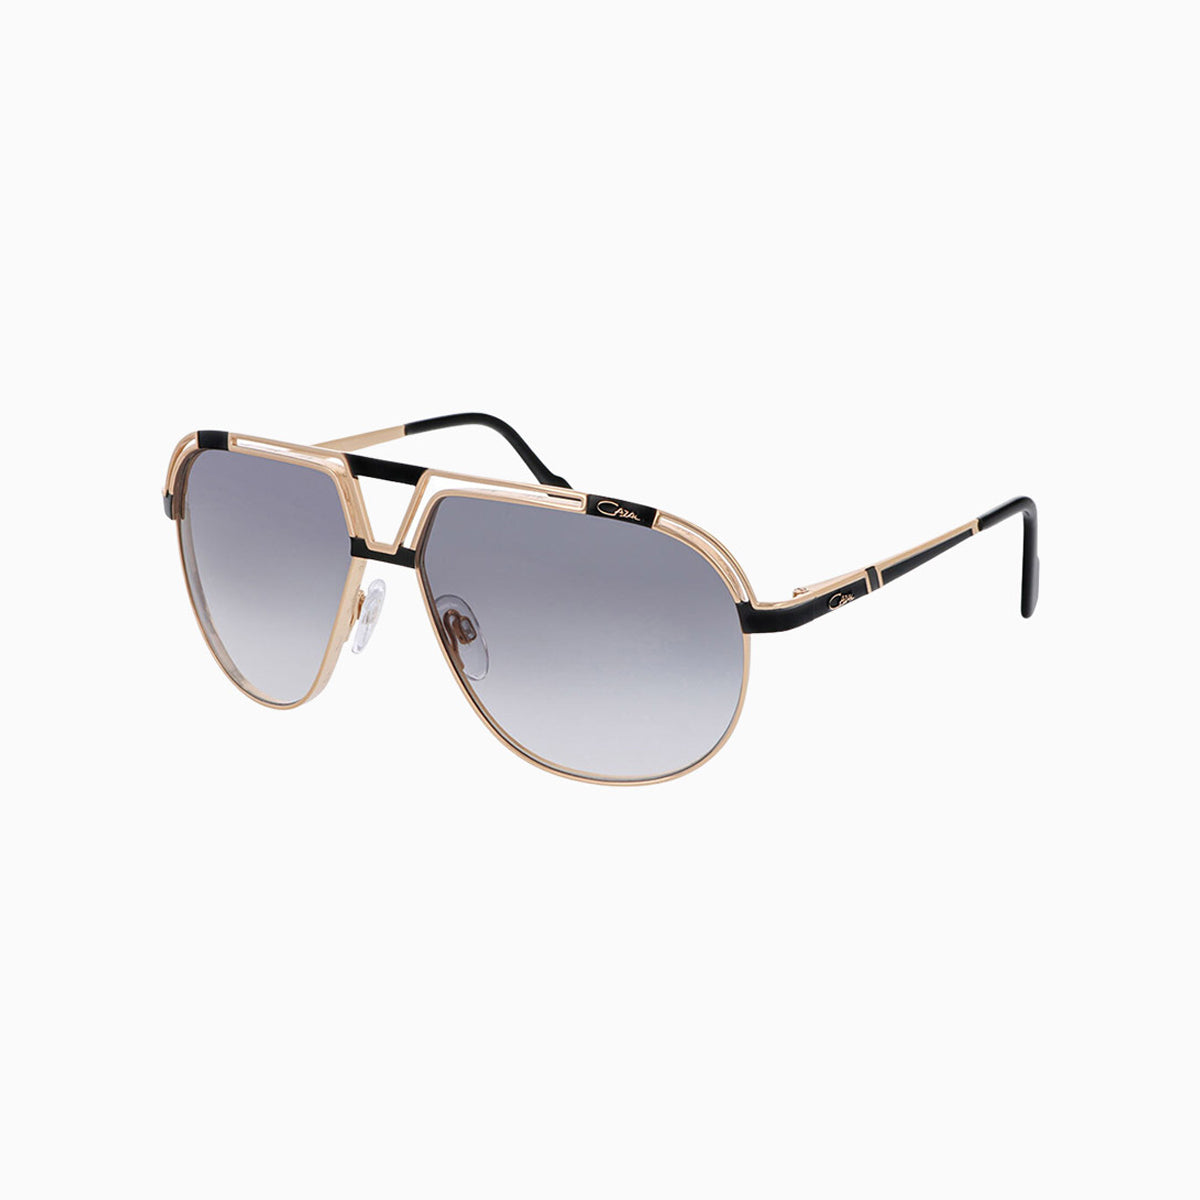 cazal-eyewear-mens-cazal-9100-001-black-gold-sunglasses-cz0910061001